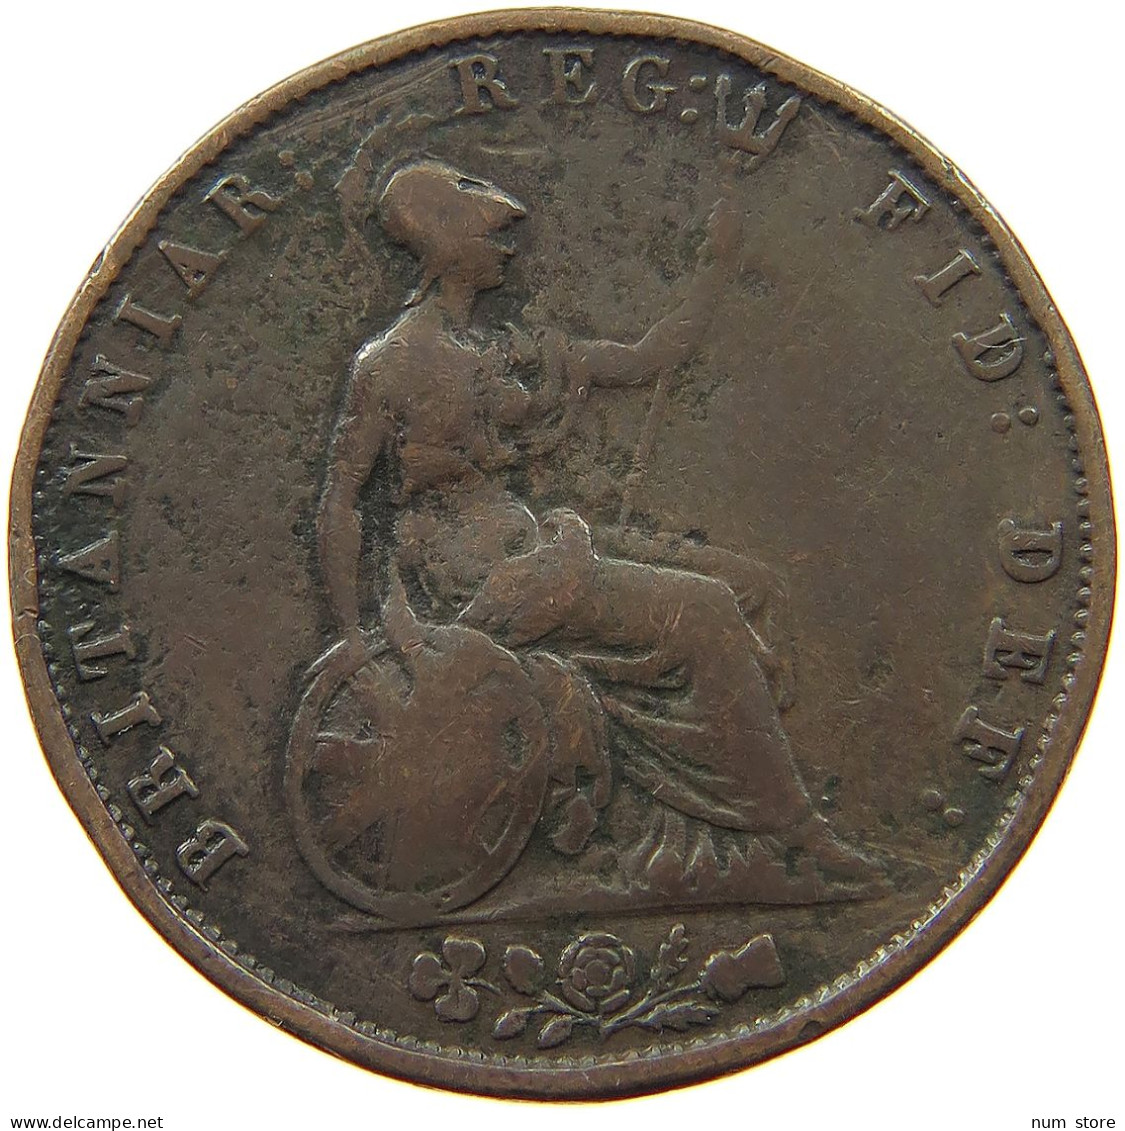 GREAT BRITAIN HALFPENNY 1855 Victoria 1837-1901 #a009 0261 - C. 1/2 Penny